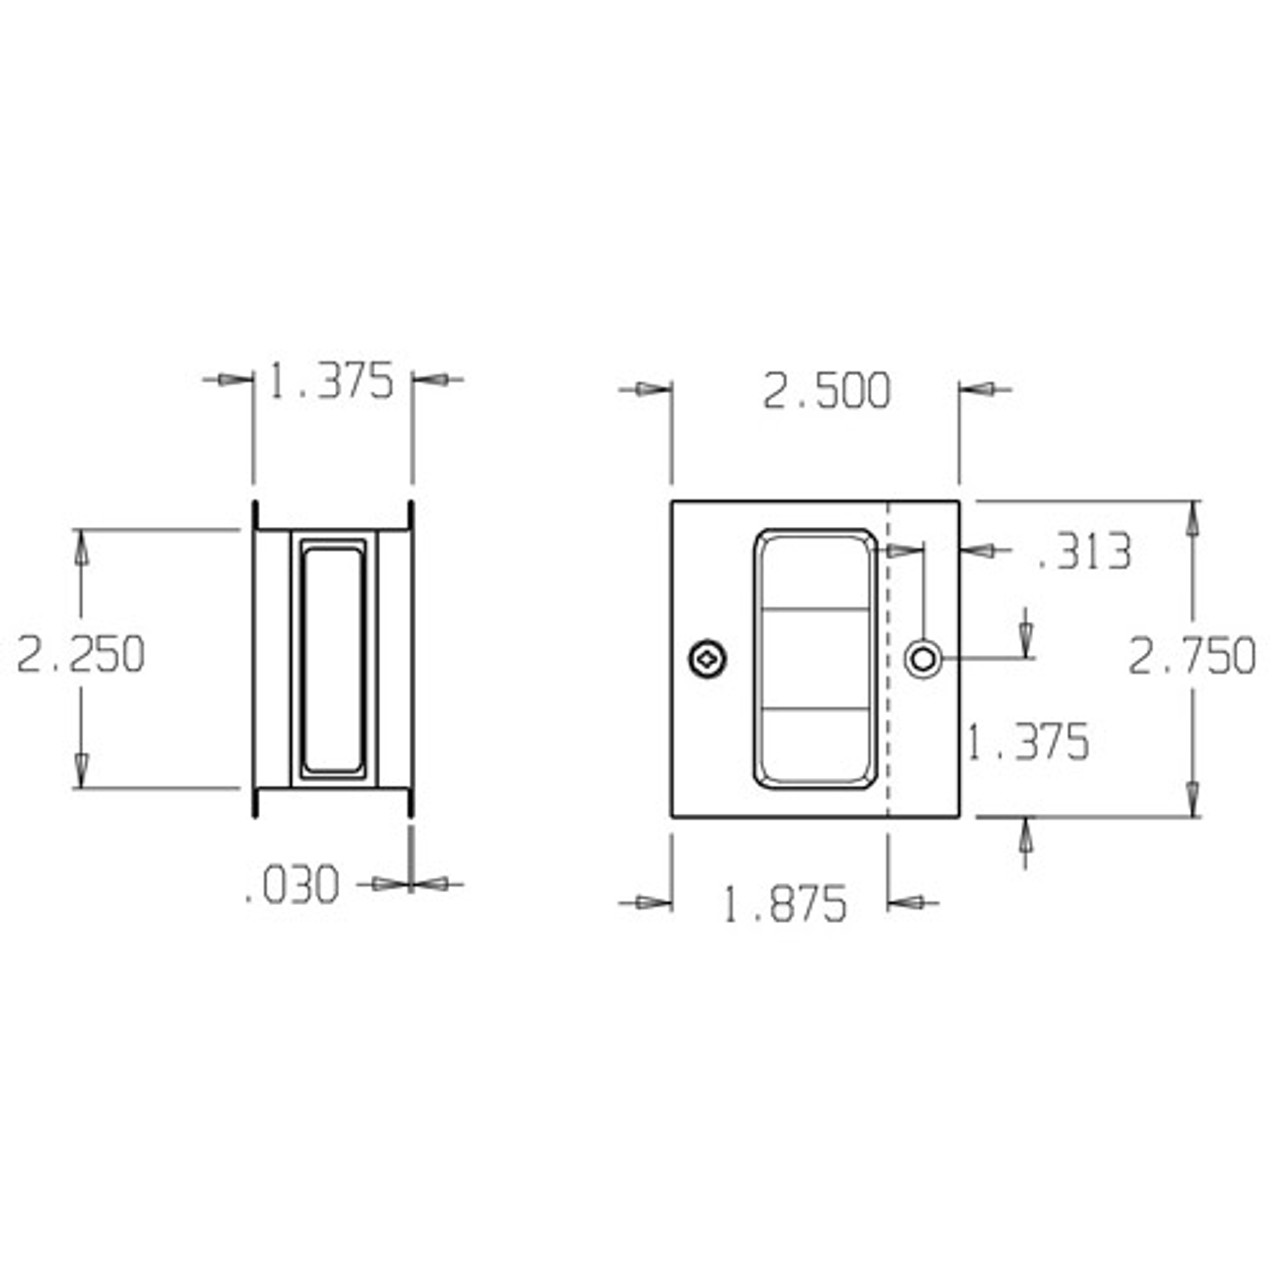 PDL-100-609 Don Jo Pocket Door Lock Dimensional View